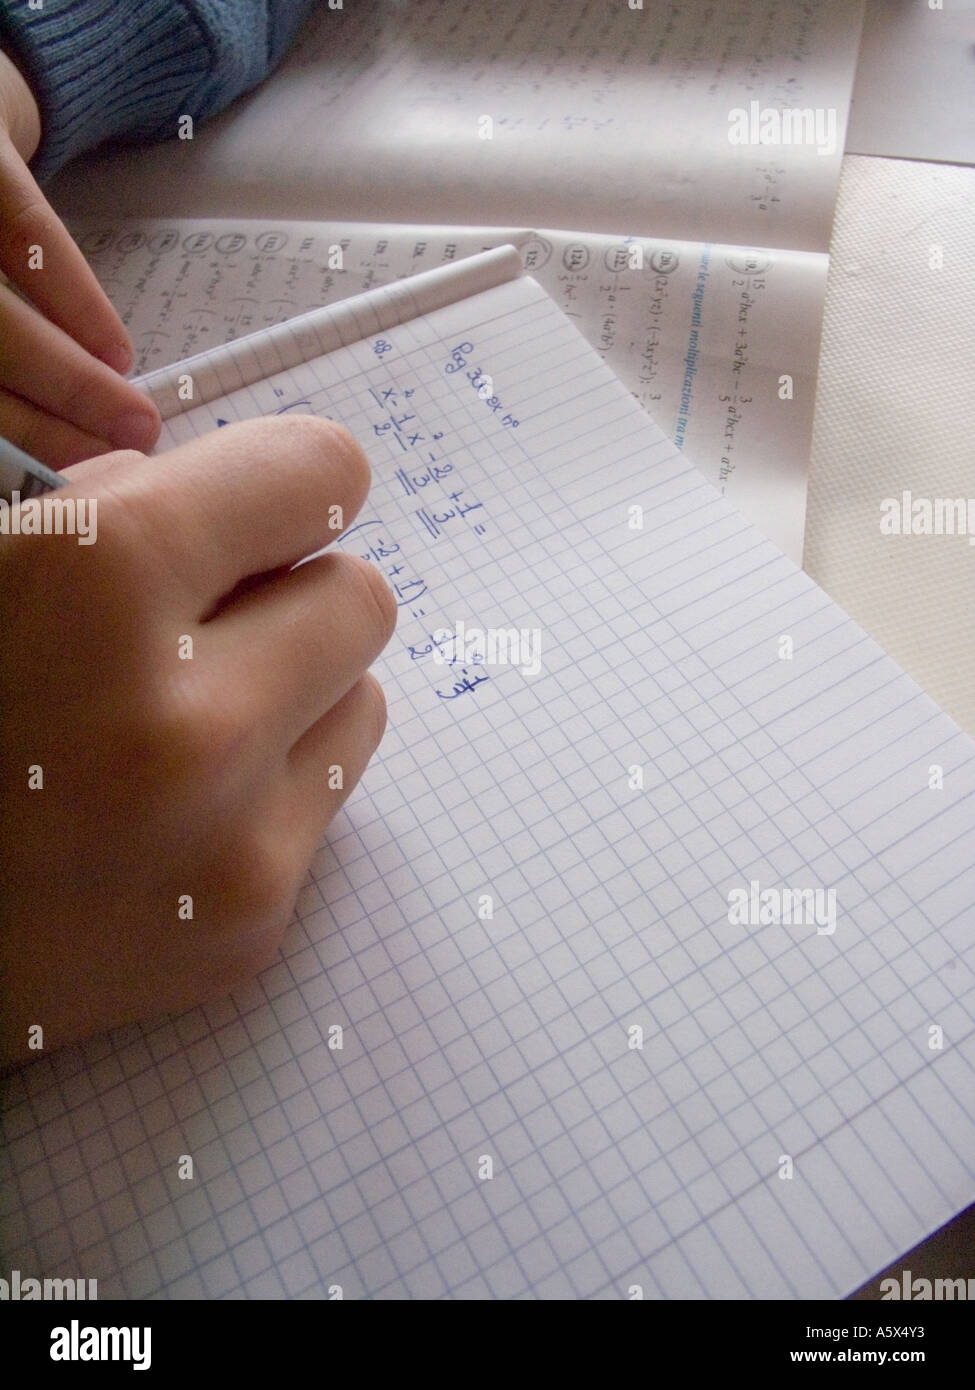 algebra homework - hand of a student writing data math calculation and equation Stock Photo